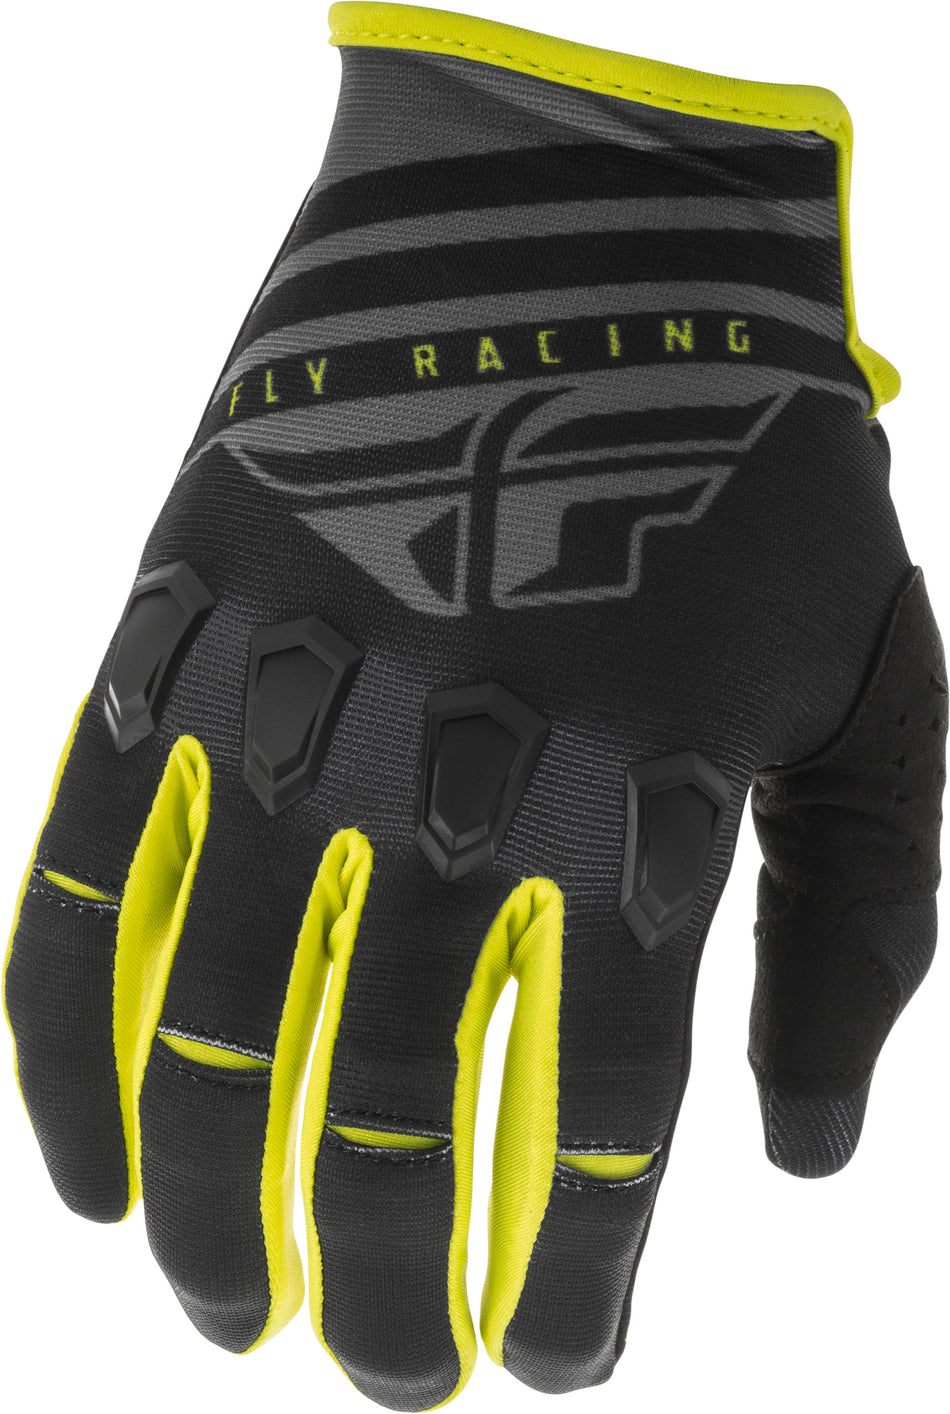 FLY RACING Kinetic K220 Gloves Black/Grey/Hi-Vis Sz 12 373-51512